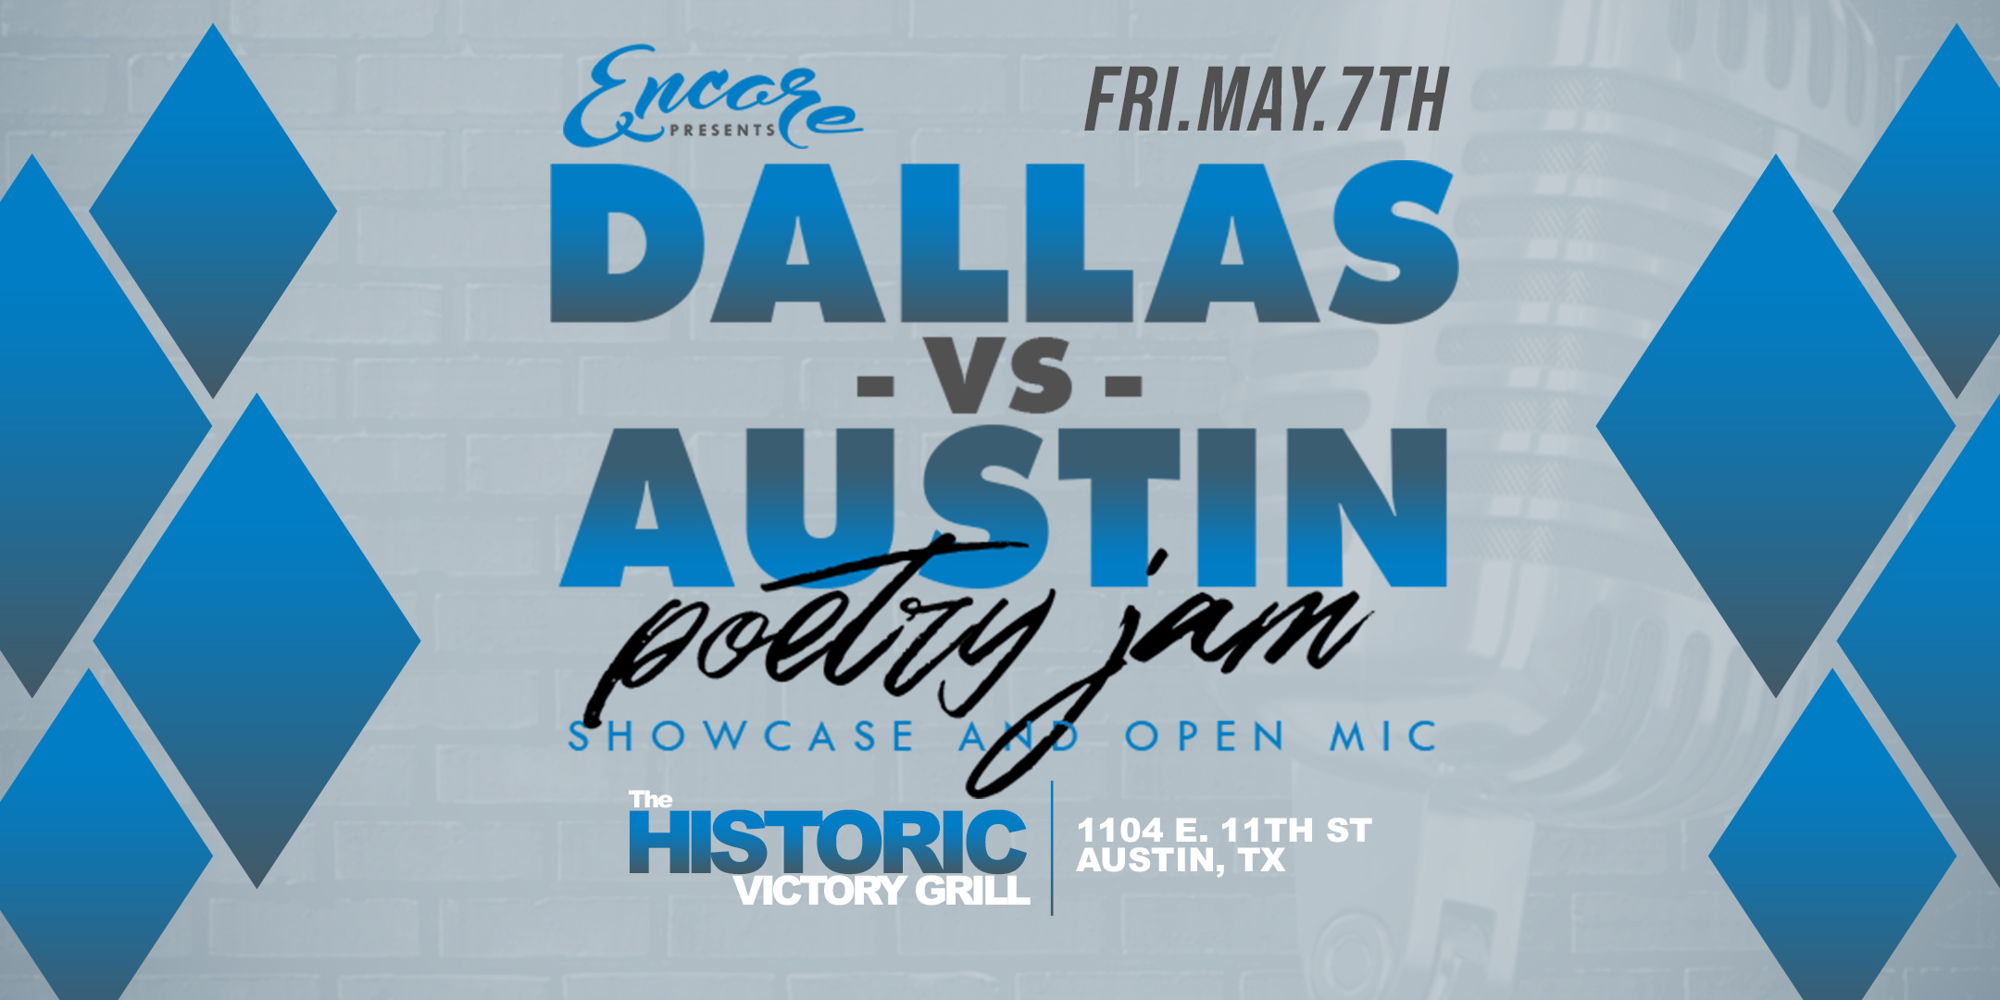 Dallas vs Austin Poetry Night promotional image